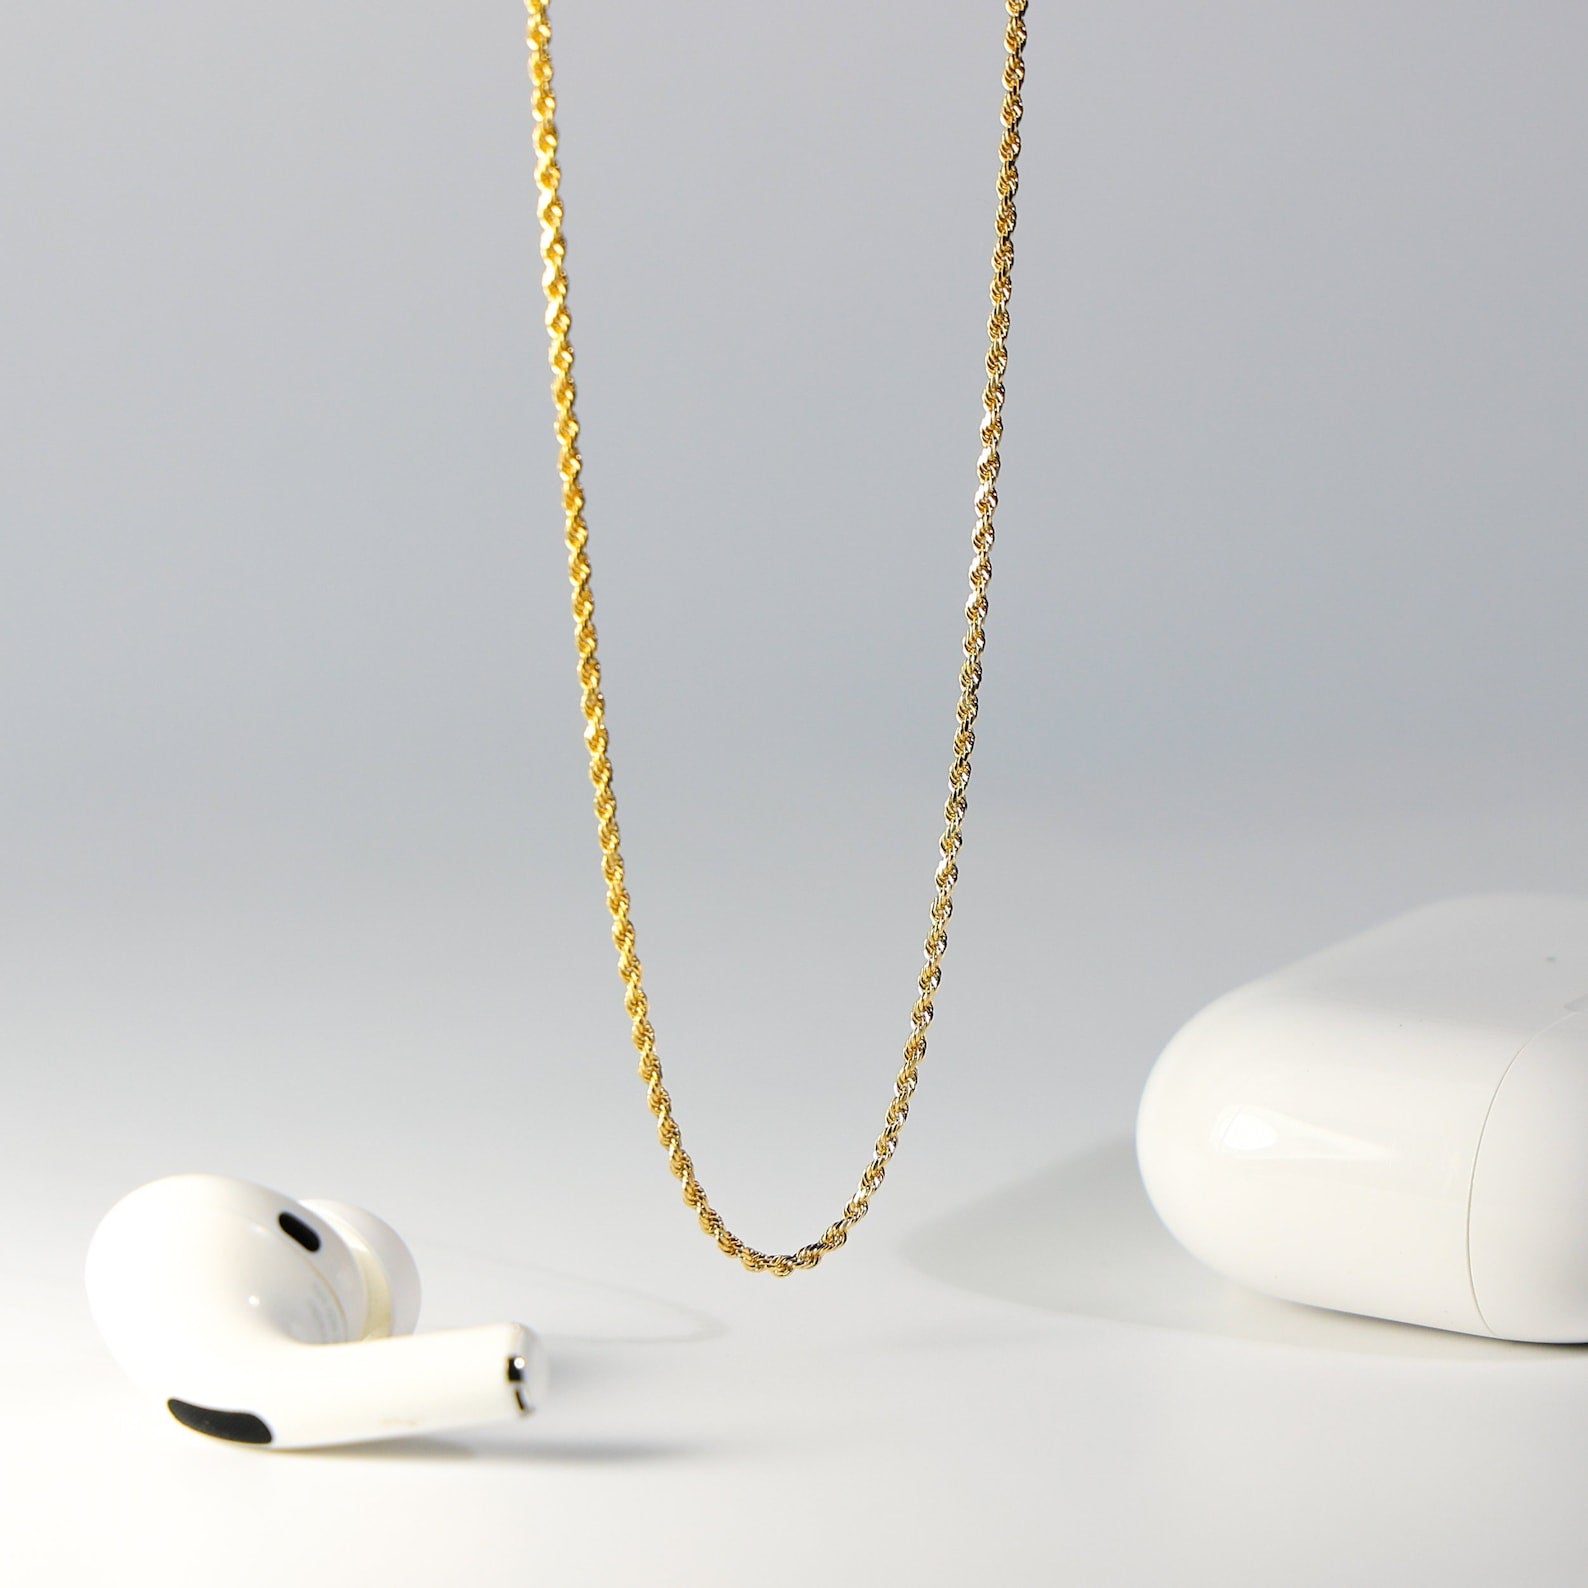 Gold Heart Locket Pendant Model-2041 - Charlie & Co. Jewelry